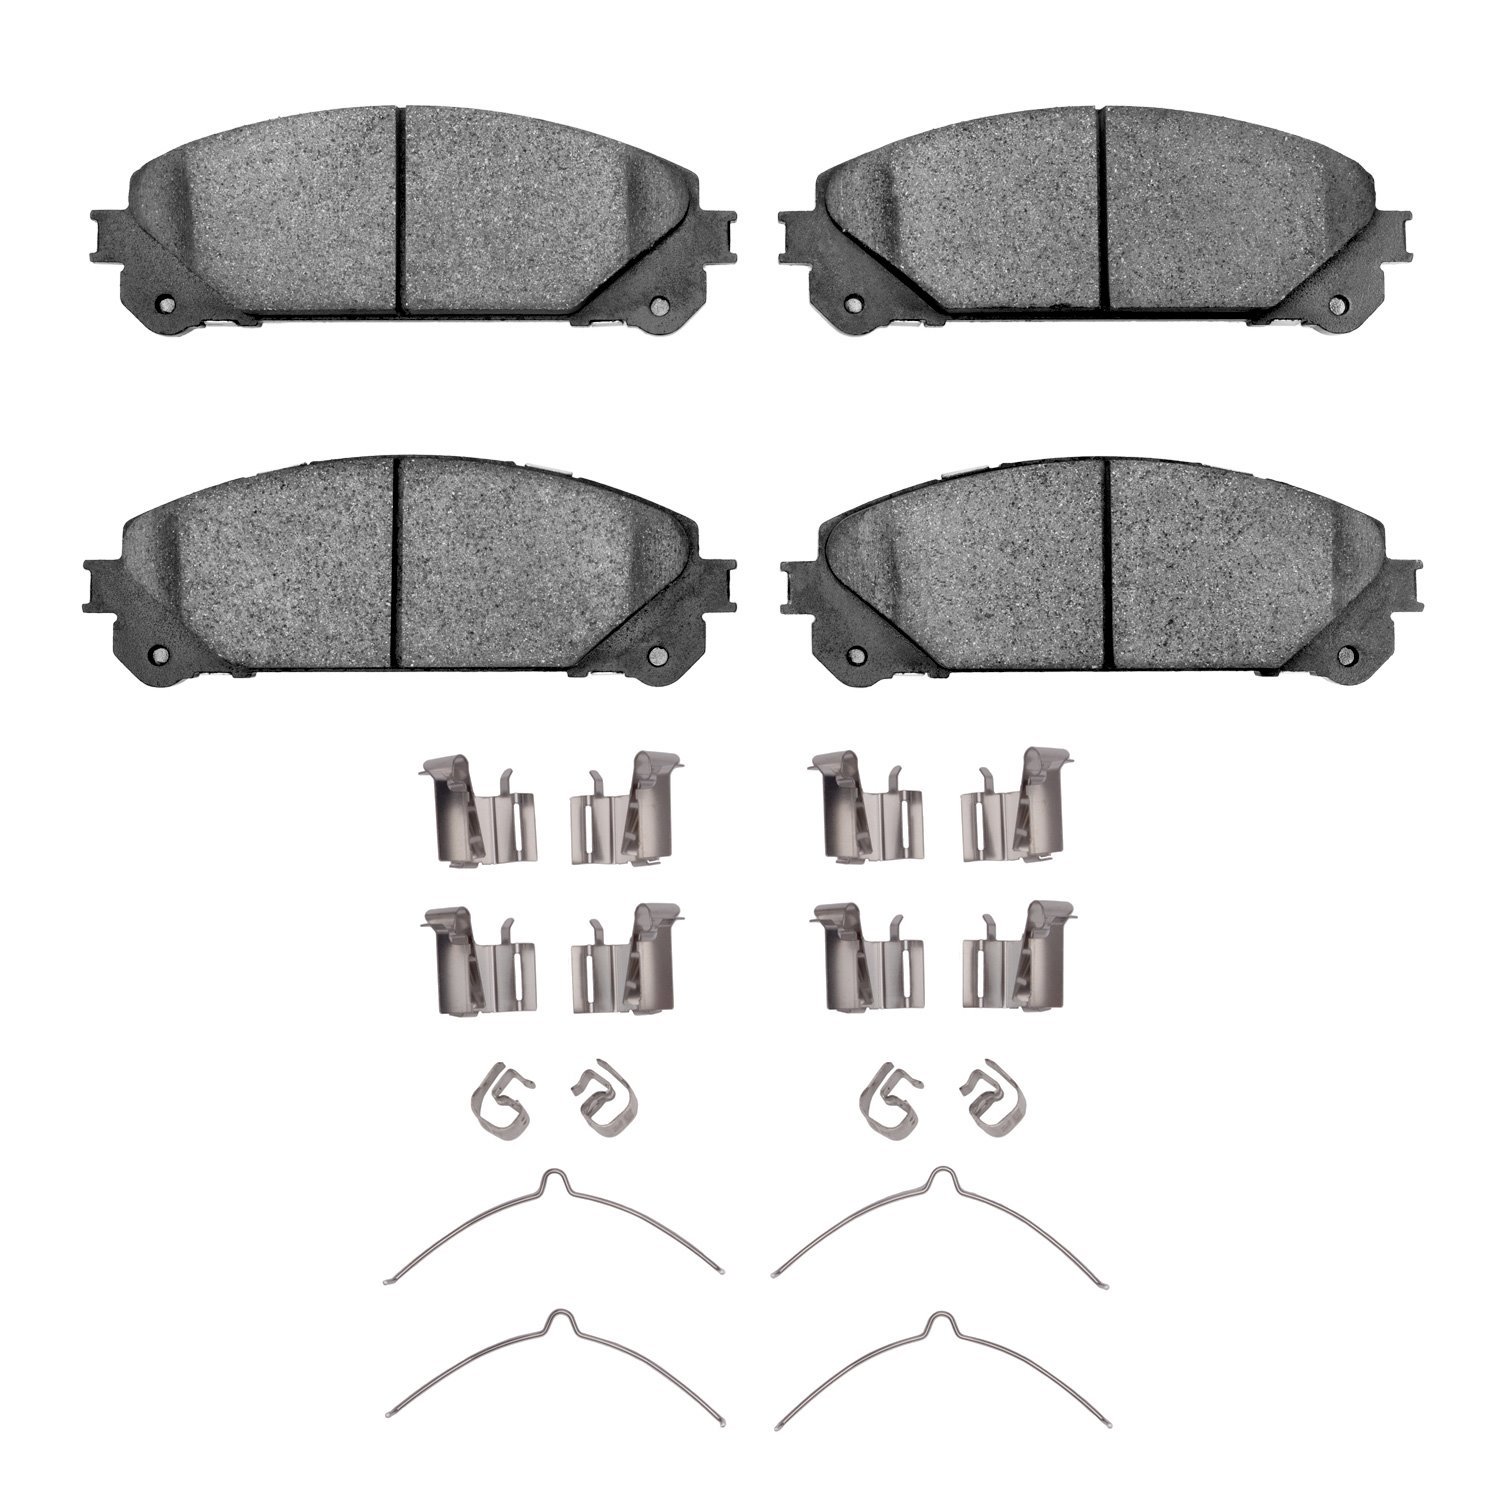 Optimum OE Brake Pads & Hardware Kit, Fits Select Fits Multiple Makes/Models, Position: Front